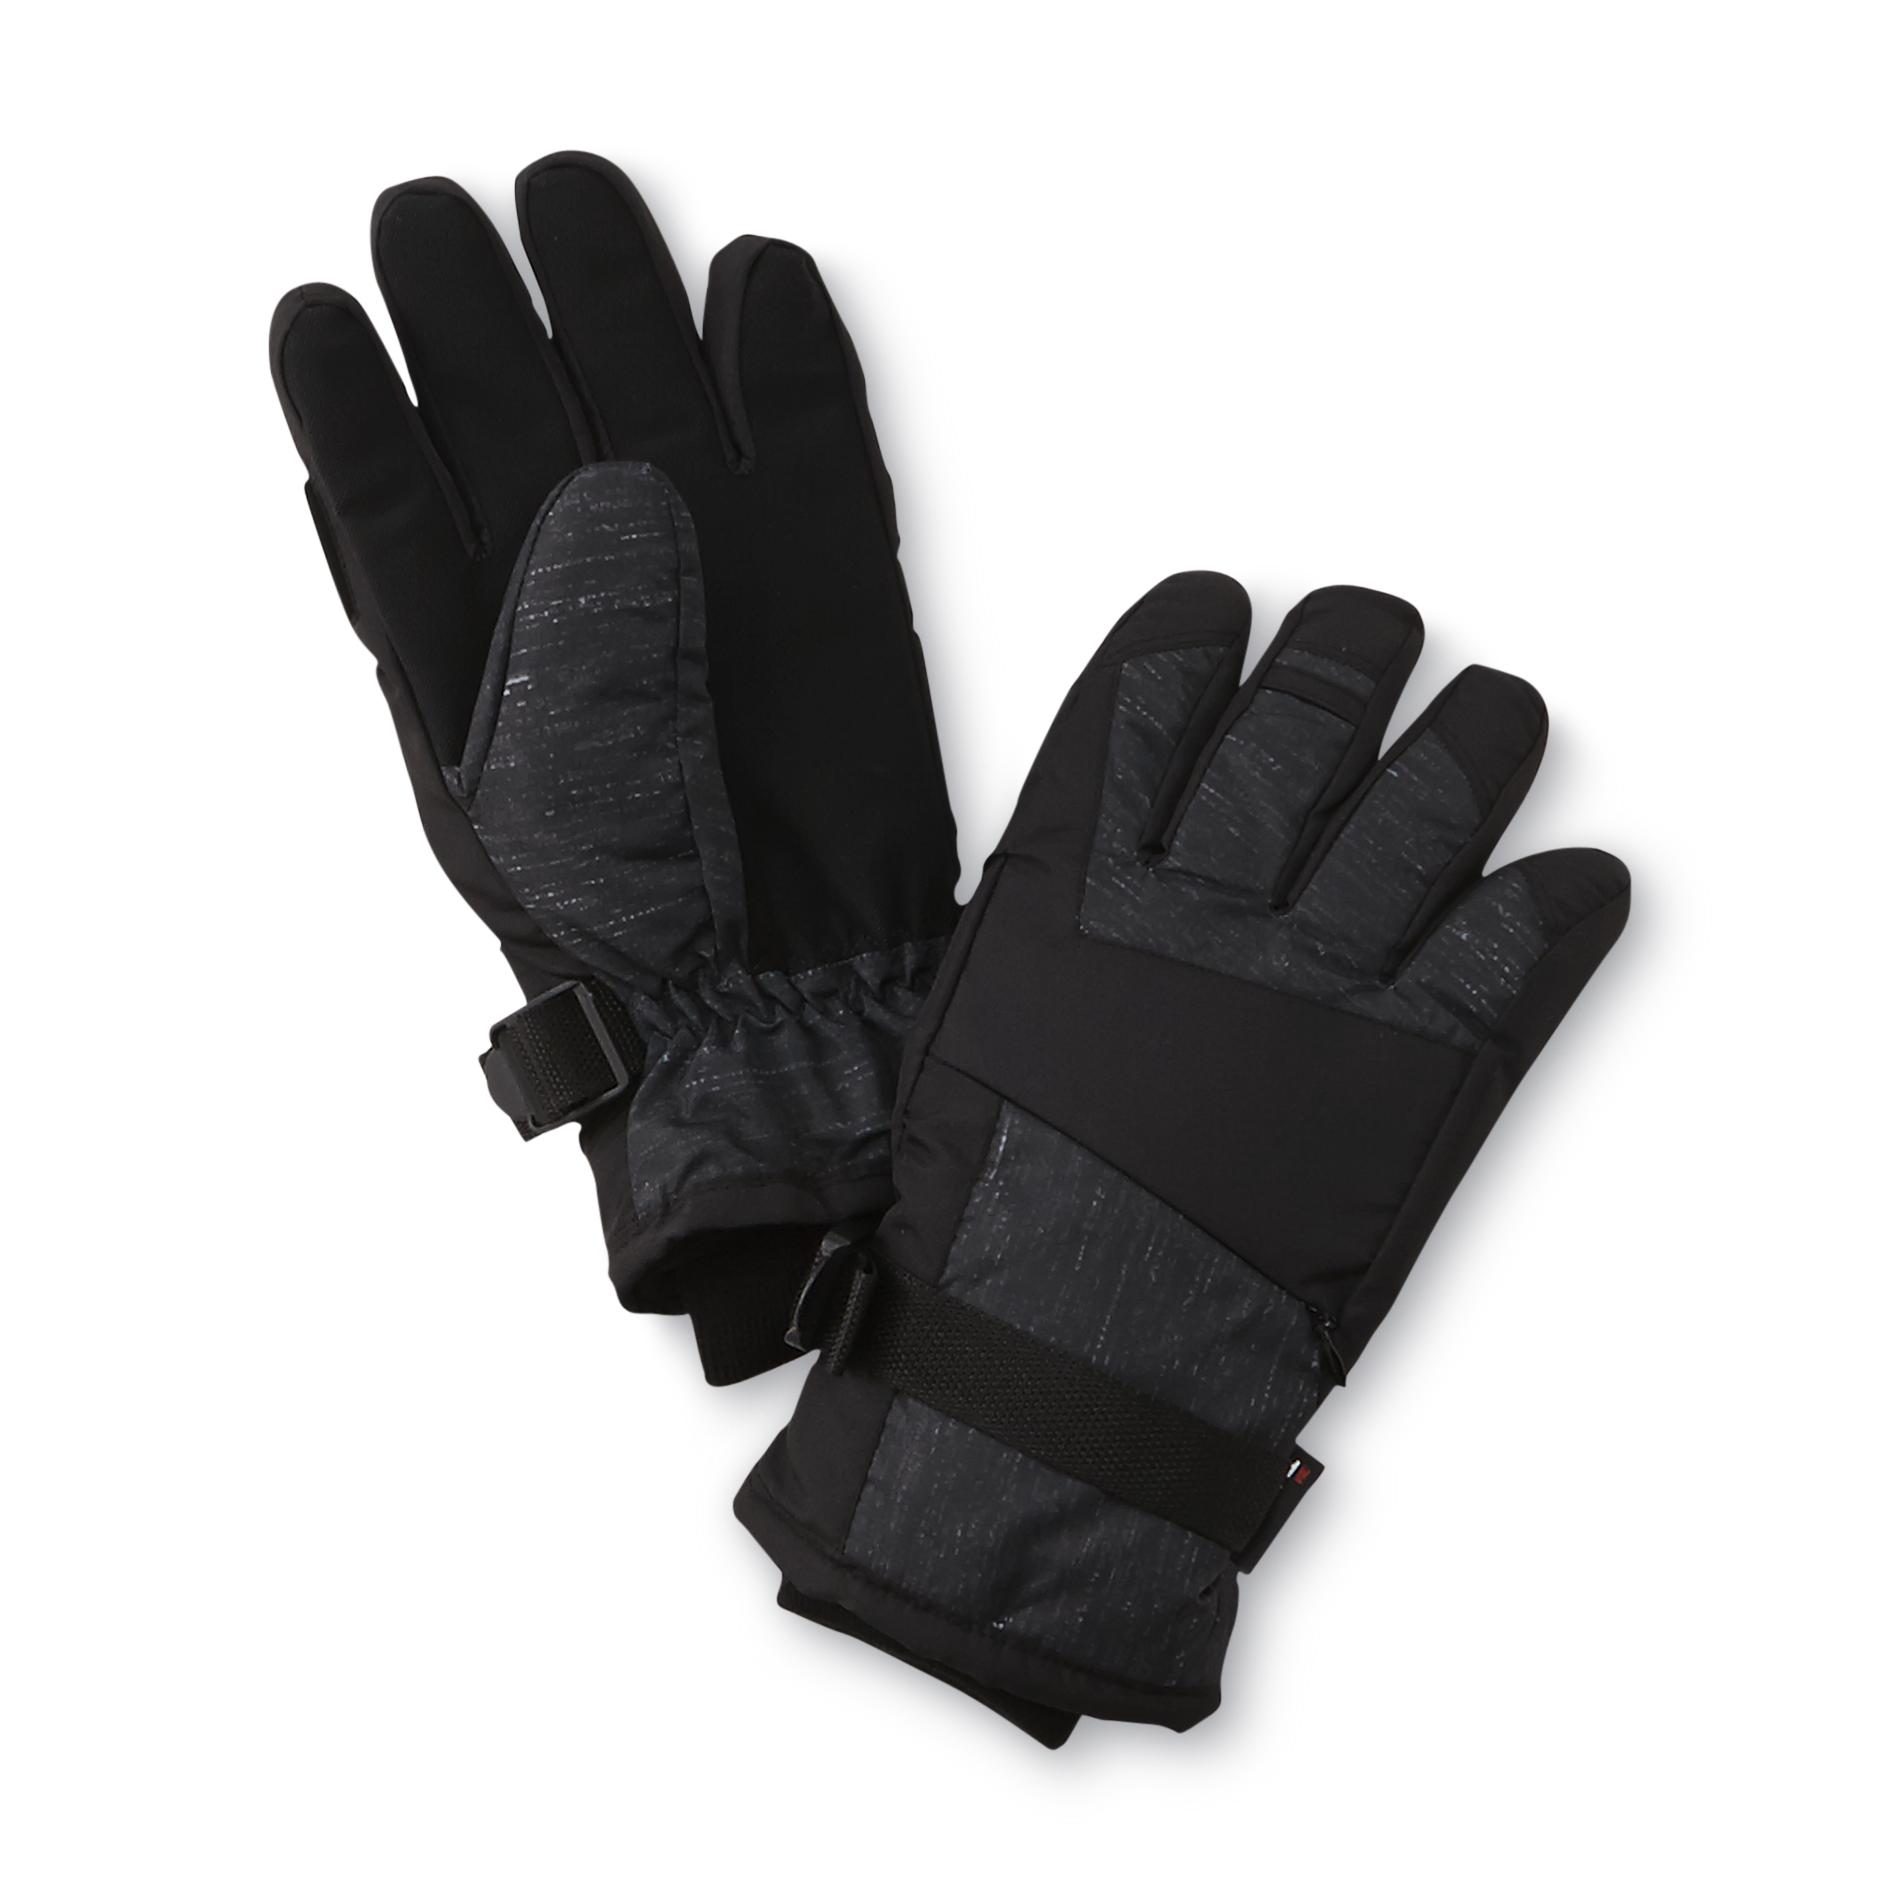 NordicTrack Men's Insulated Winter Gloves